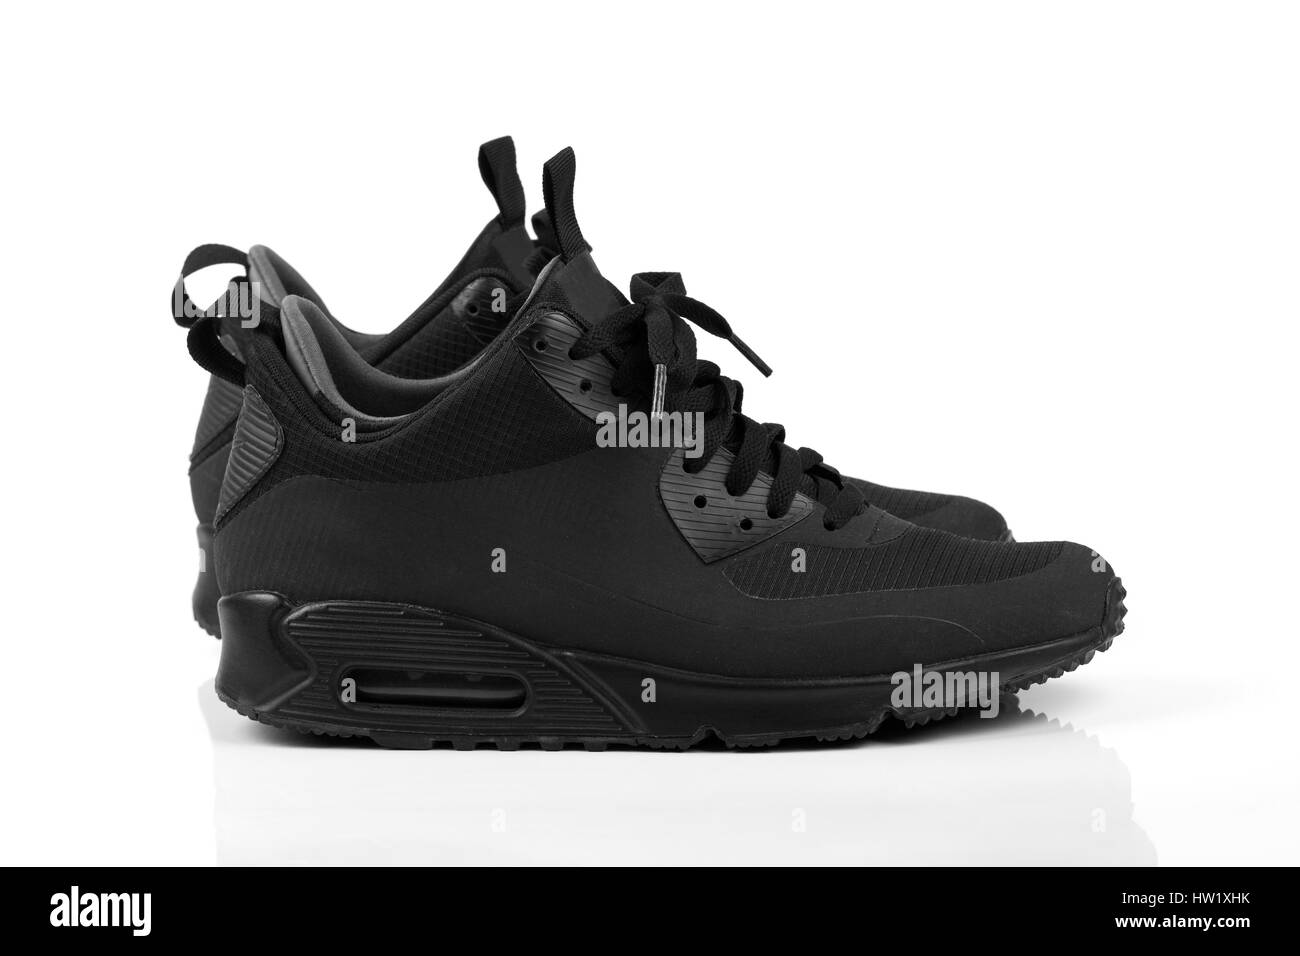 Zapatillas nike negras fotografías e imágenes de alta resolución - Alamy